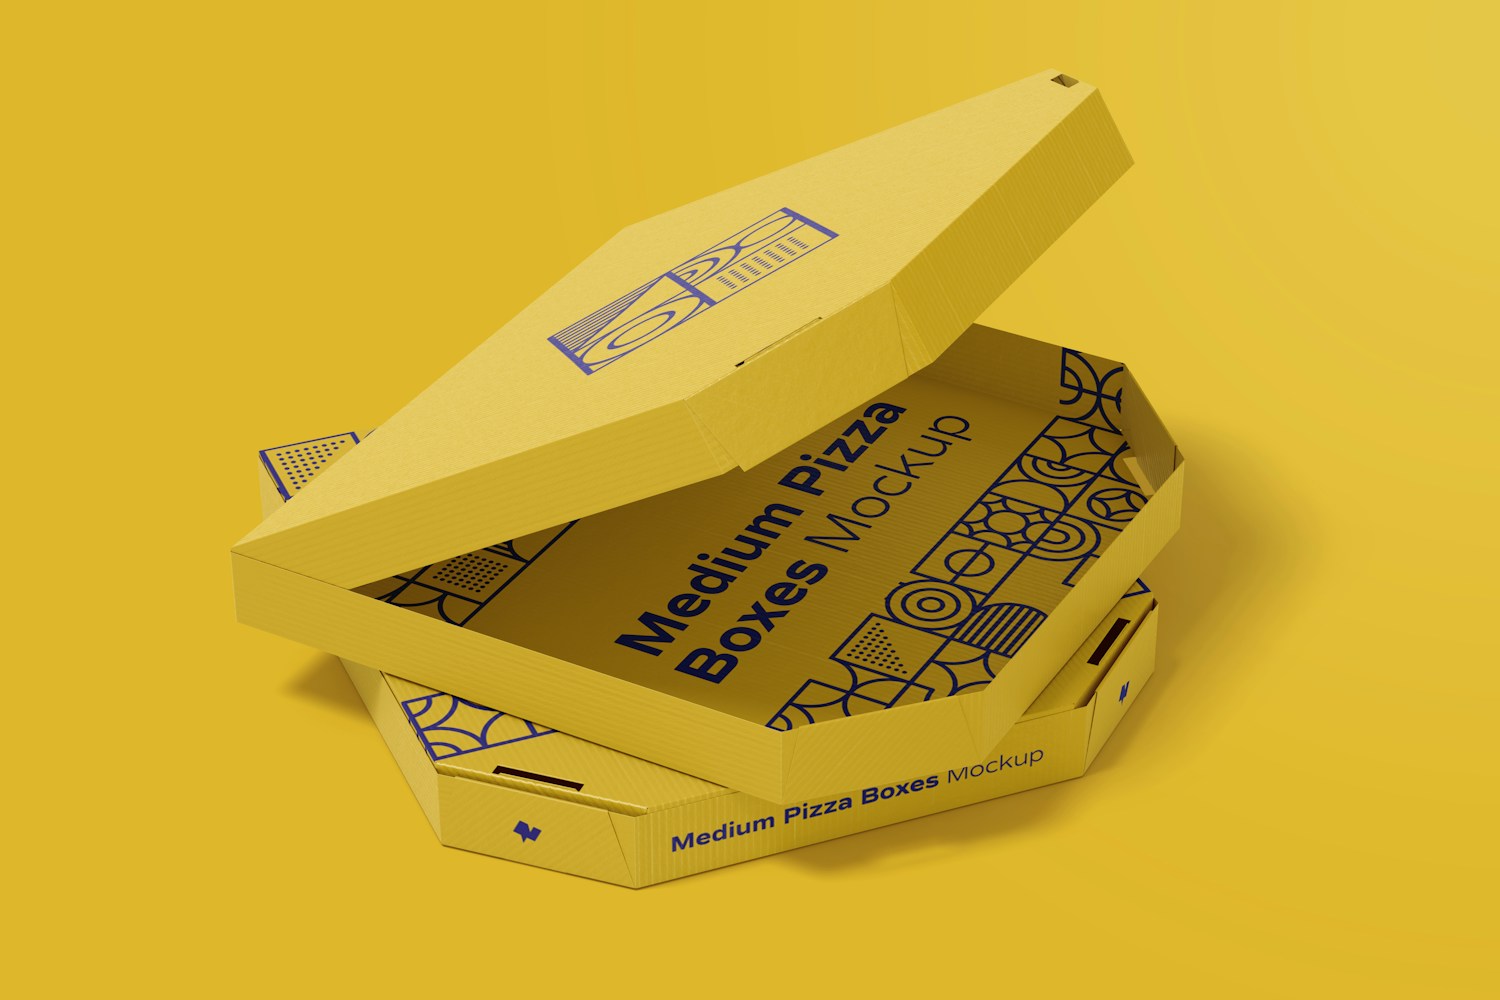 Medium Pizza Boxes Mockup, Stacked Set